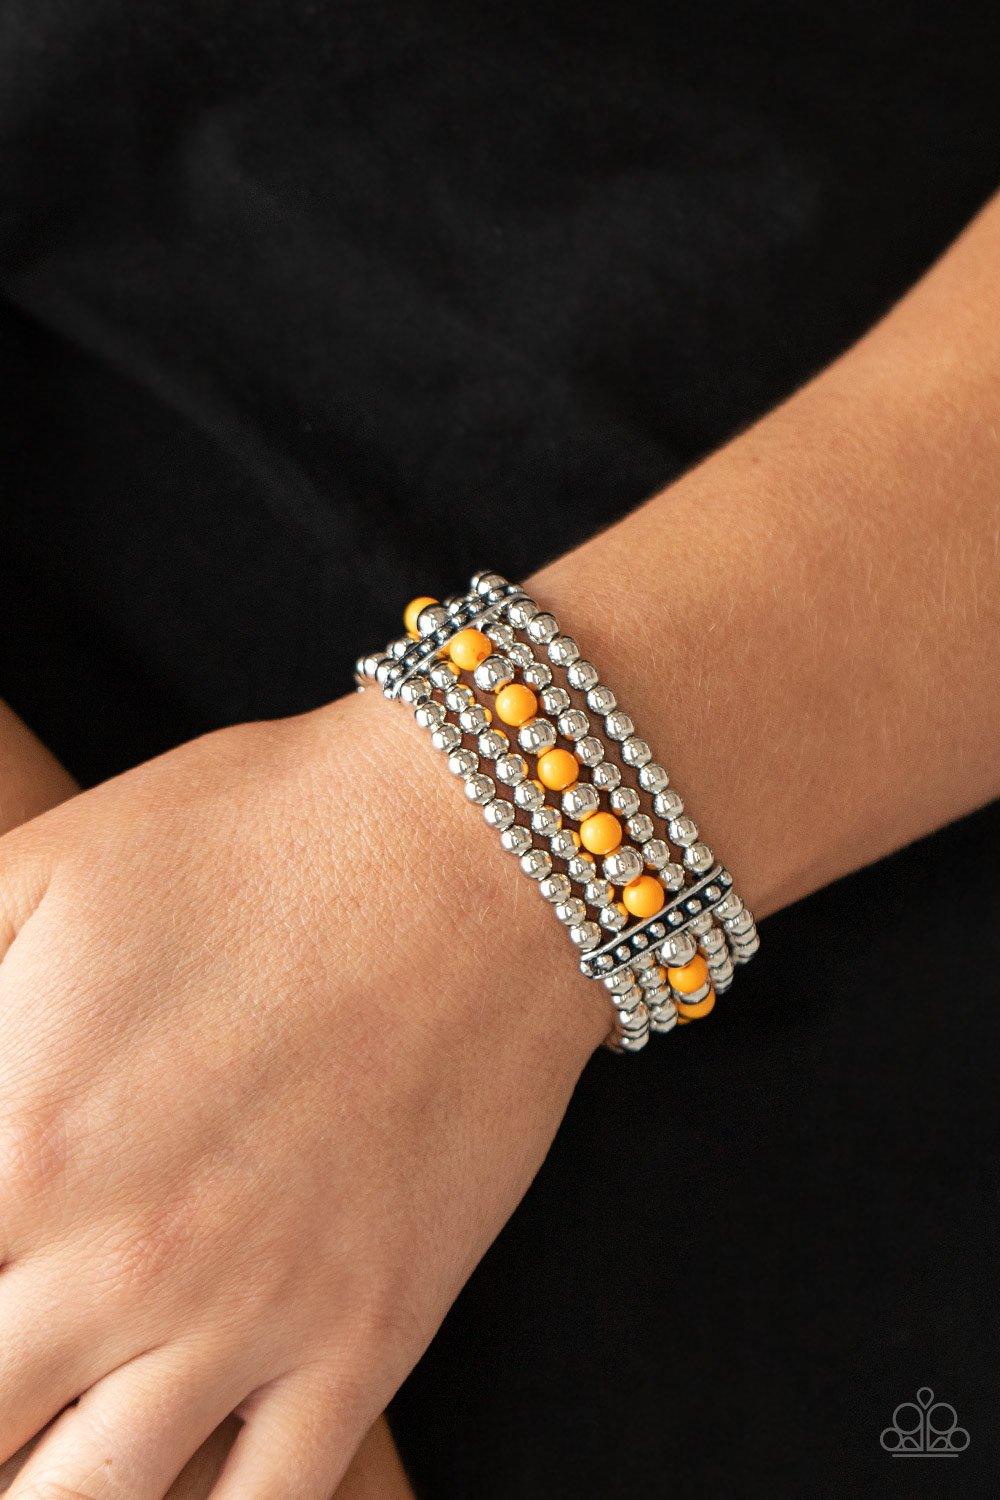 Paparazzi Accessories-Gloss Over The Details - Orange Bracelets